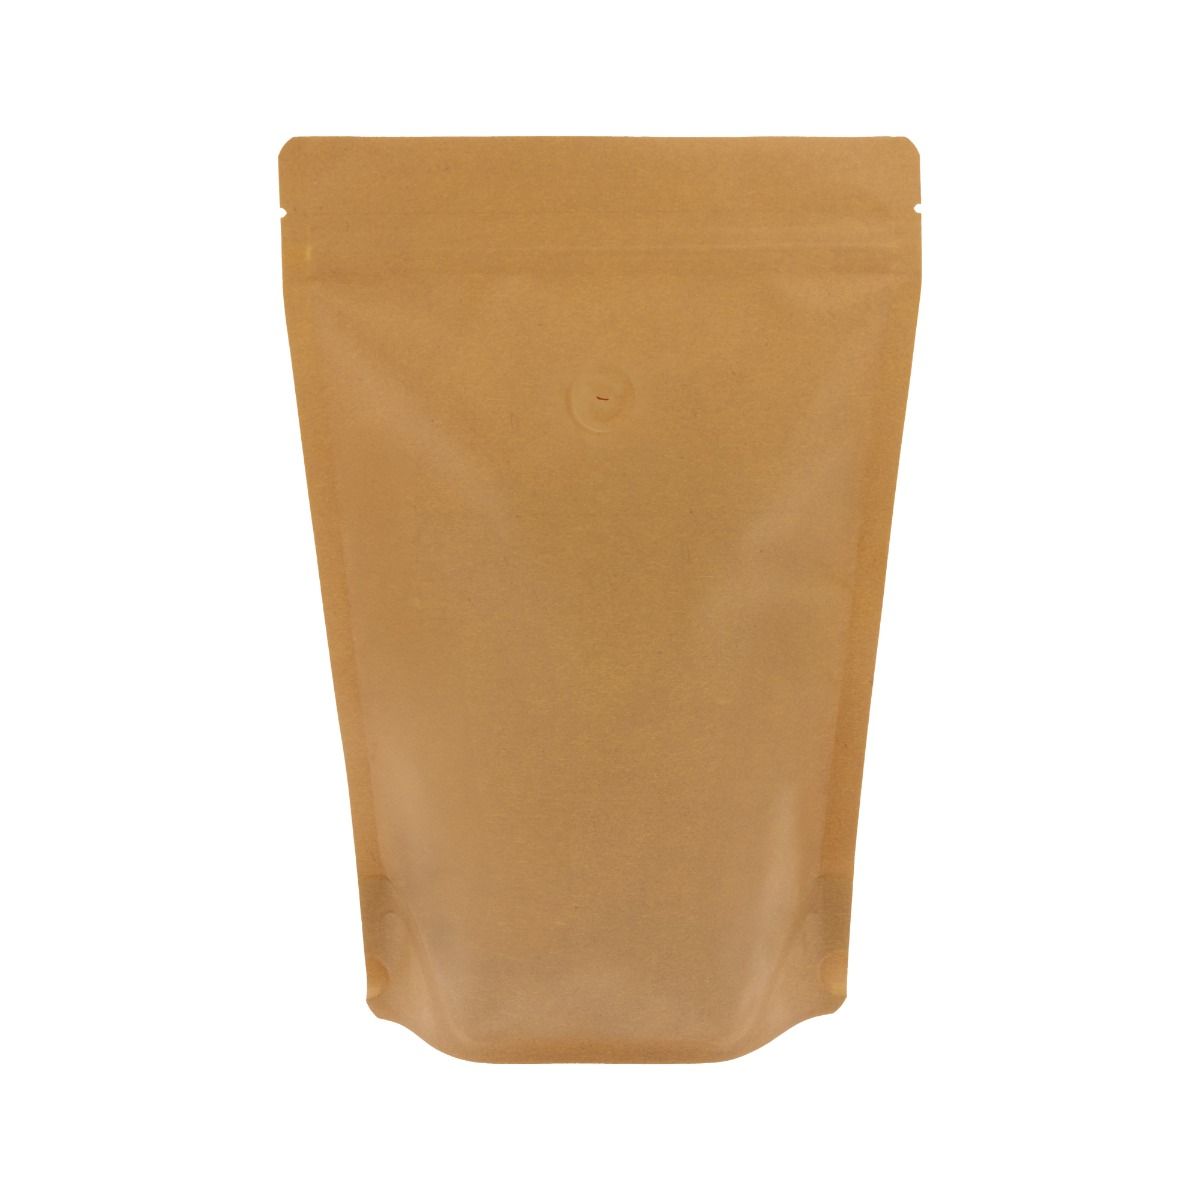 Coffee pouch - Kraft Look (100% recyclable)